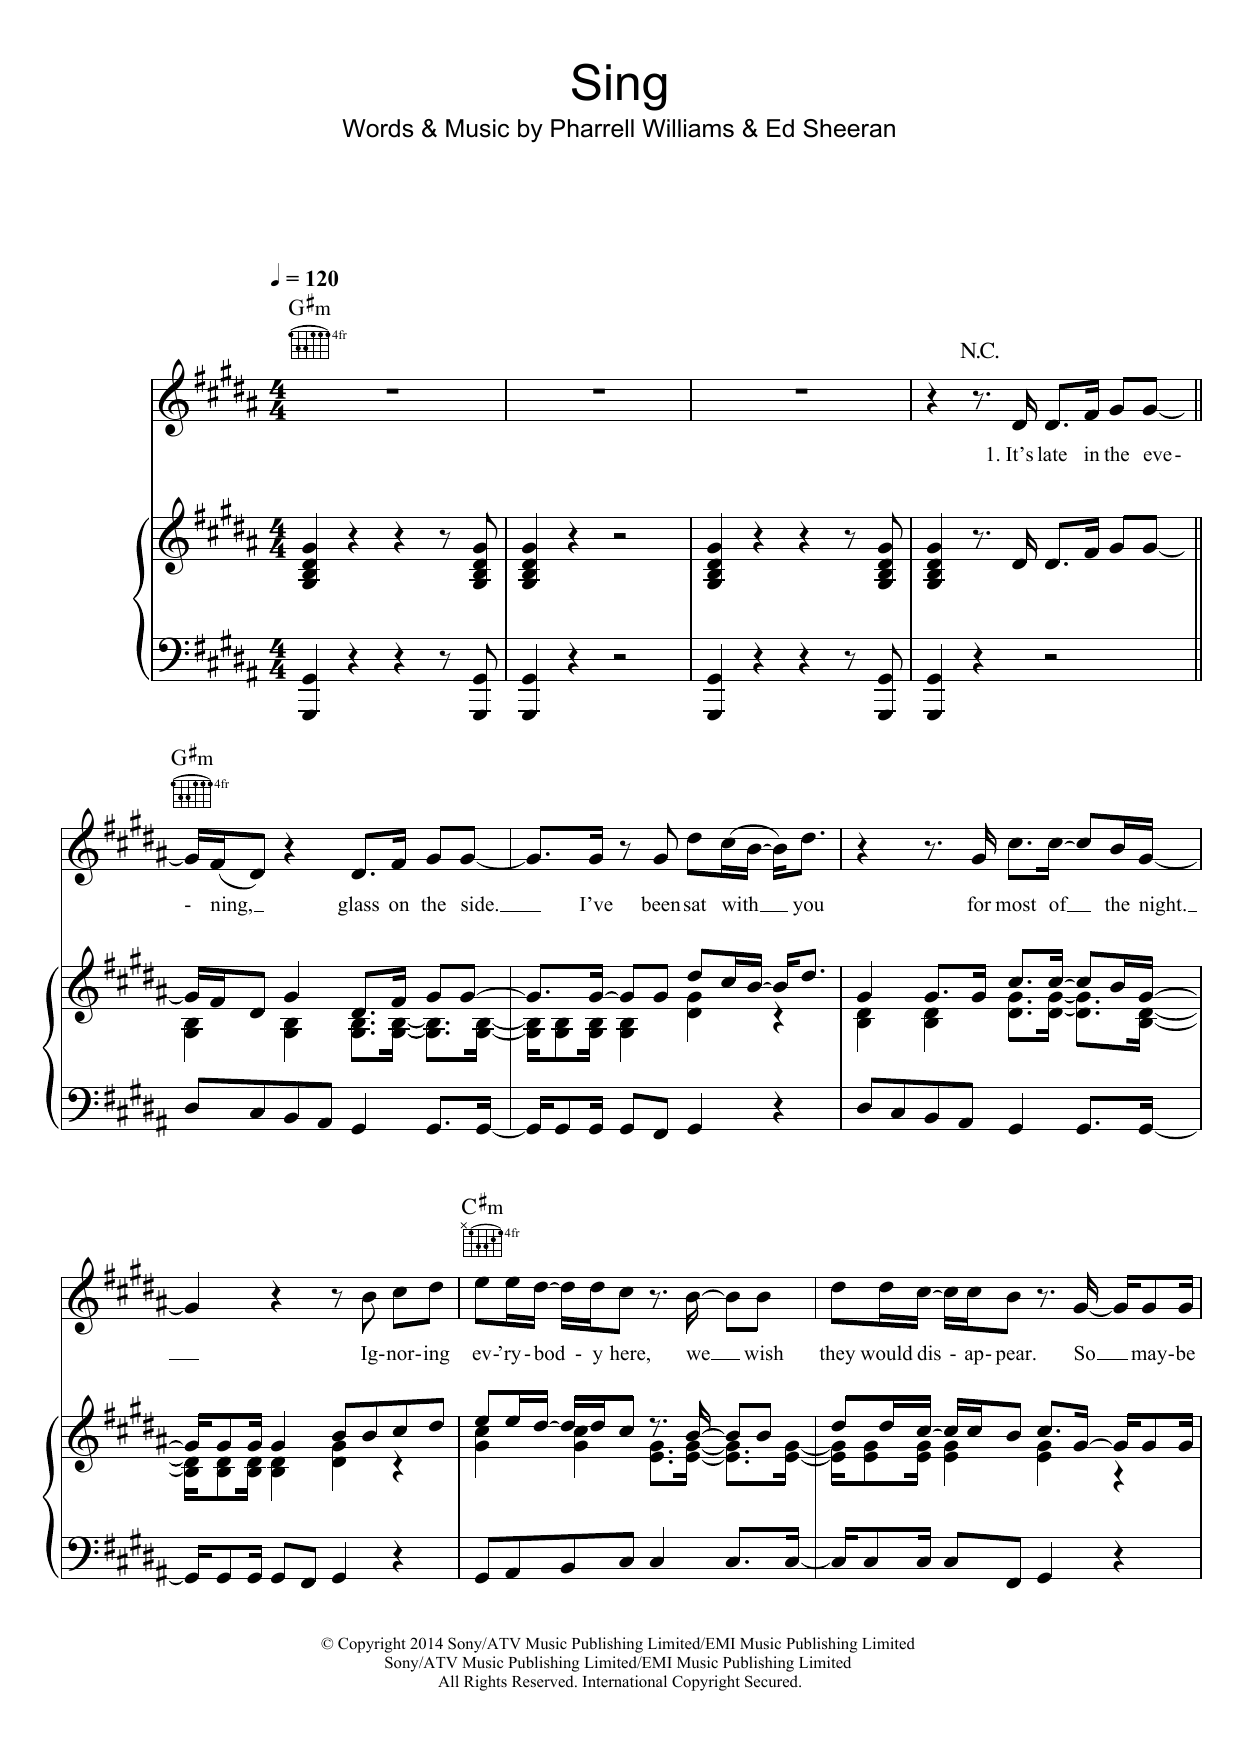 Ed Sheeran Sing Sheet Music Notes & Chords for Piano, Vocal & Guitar (Right-Hand Melody) - Download or Print PDF